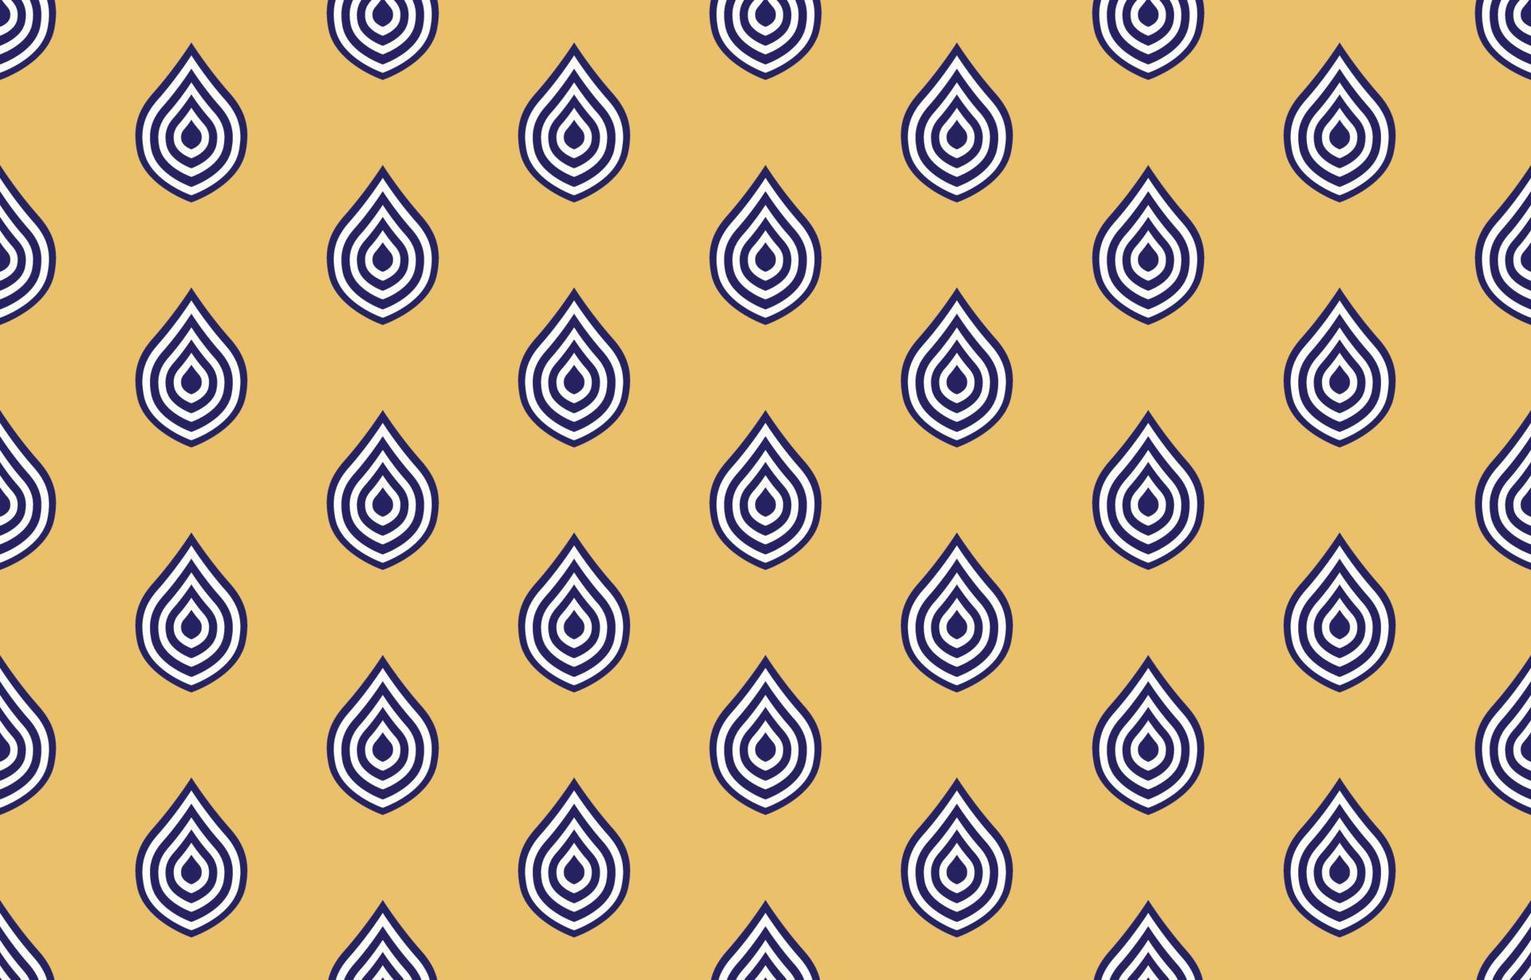 patrón sin costuras ikat. Fondo de bordado tradicional indio africano tribal geométrico vectorial. moda bohemia. tela étnica alfombra batik ornamento chevron textil decoración papel pintado vector